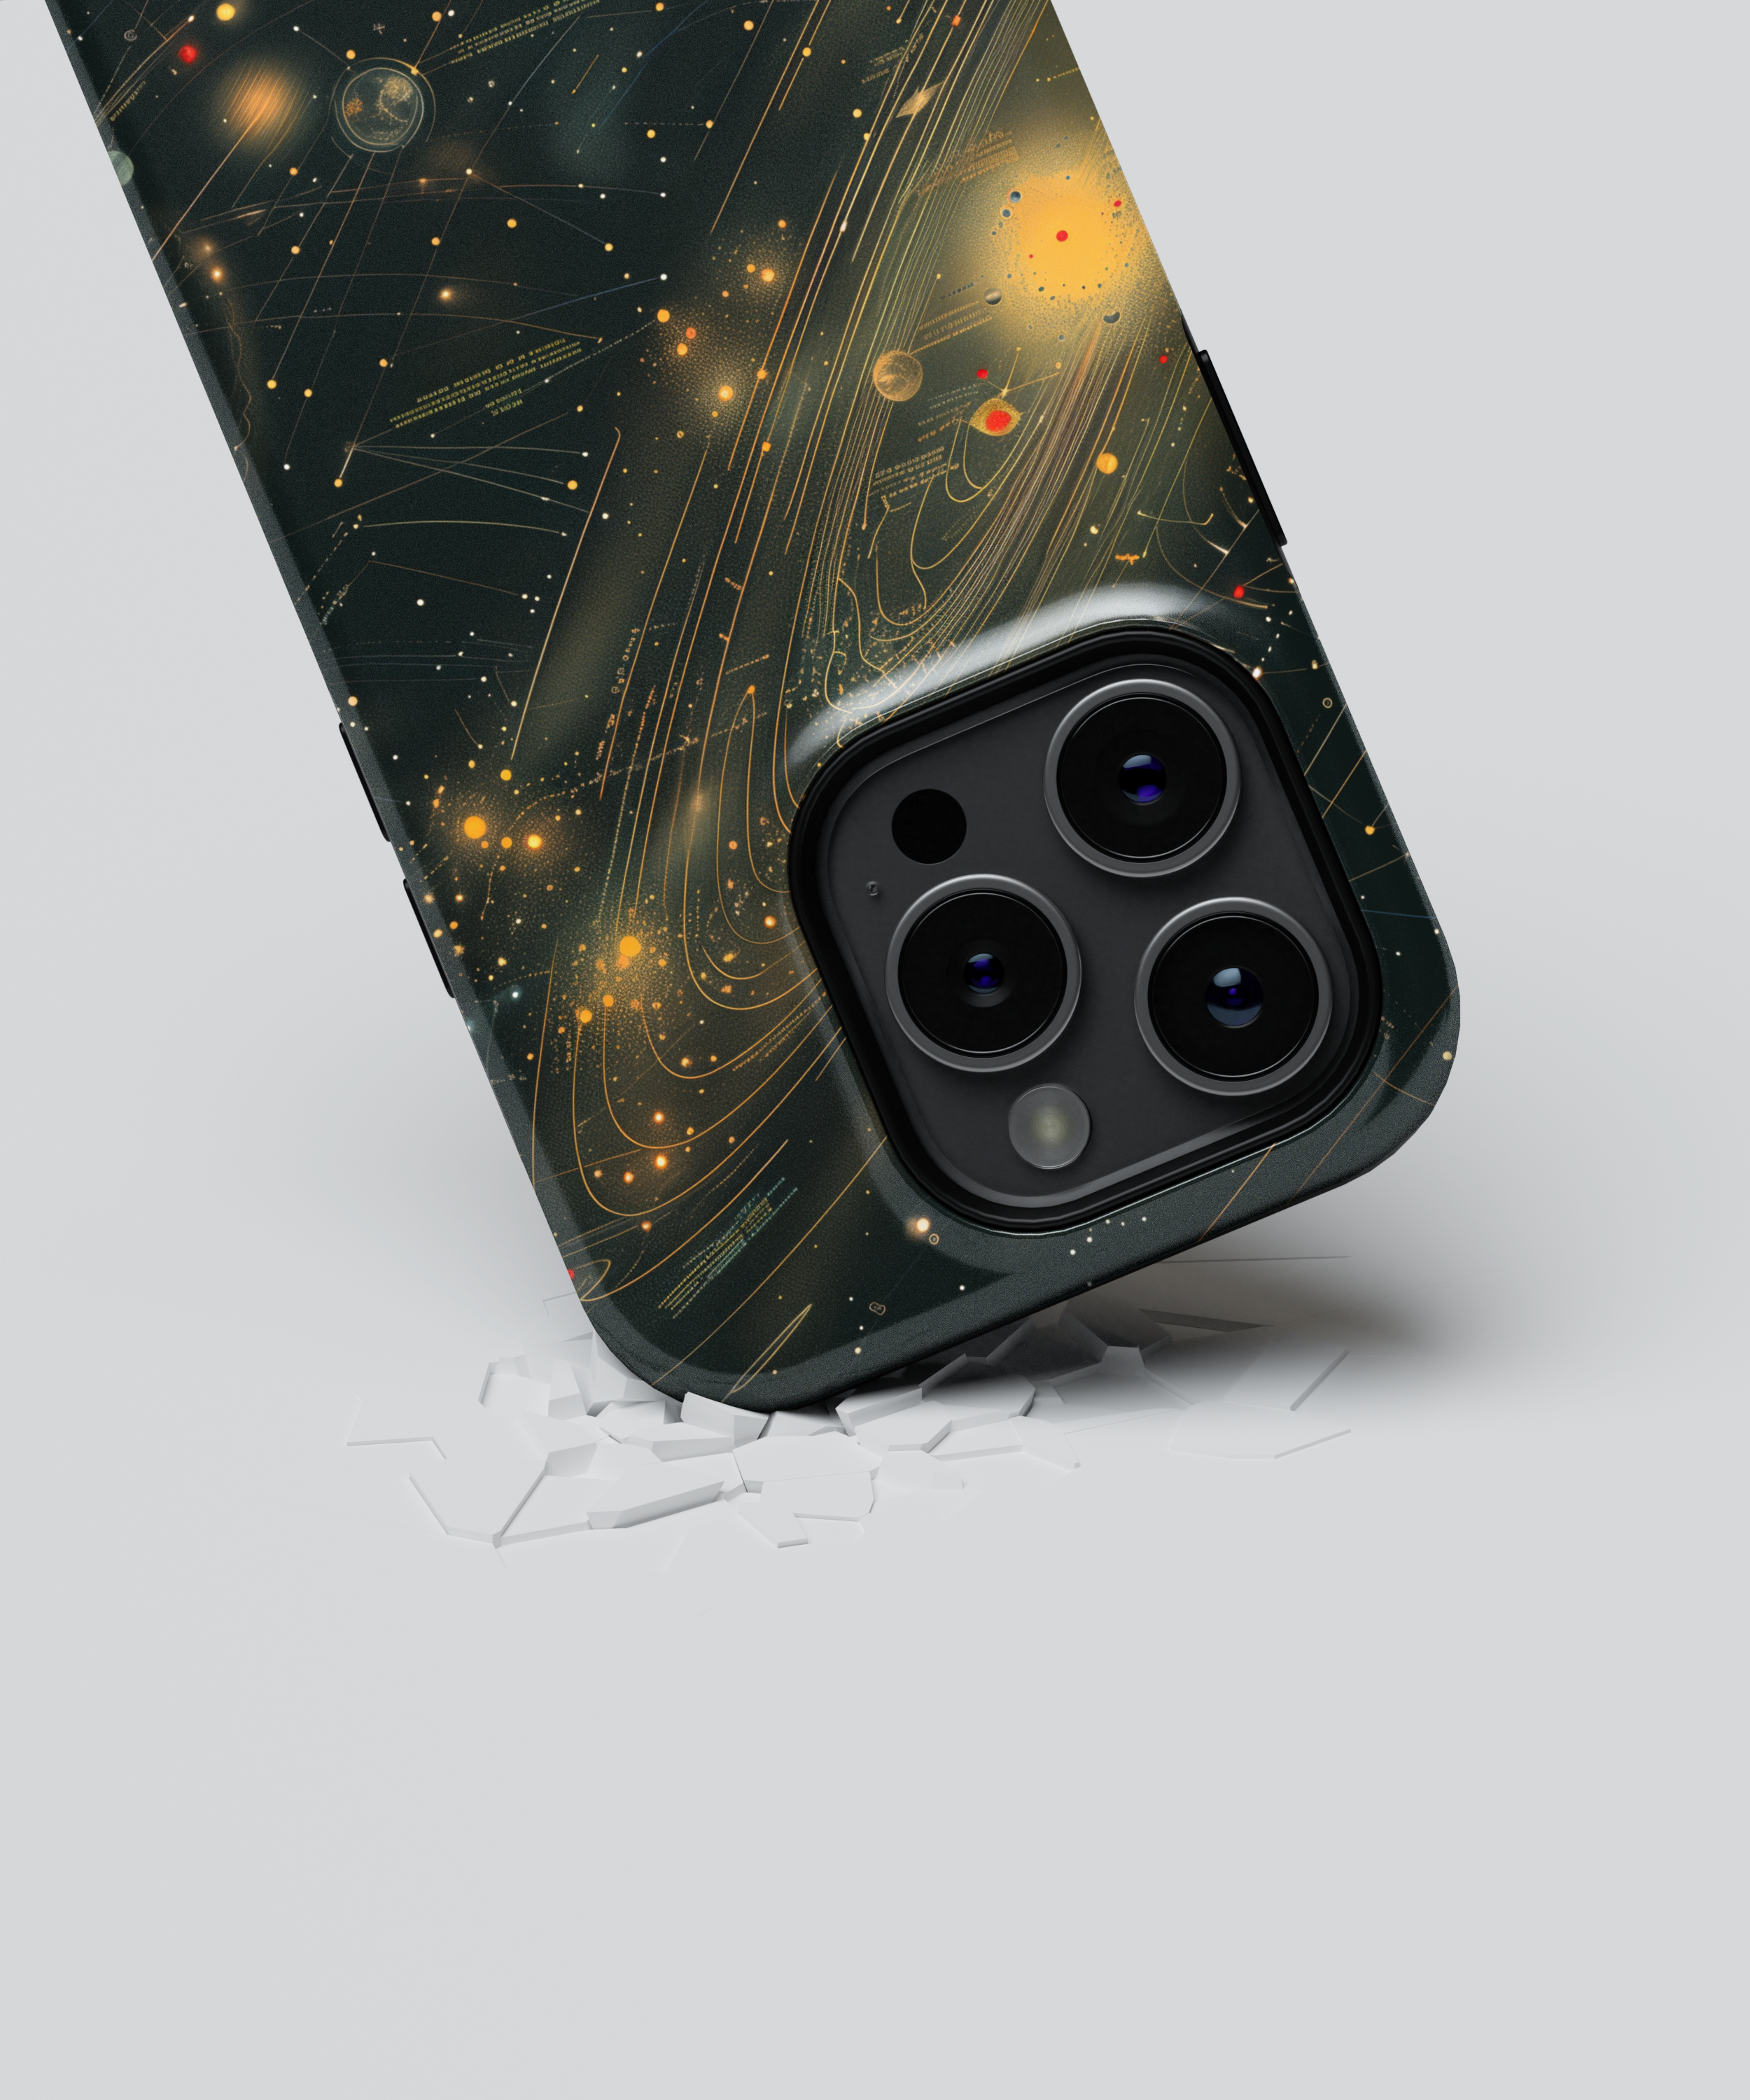 iPhone Tough Case - Galactic Pathfinder Atlas - CASETEROID